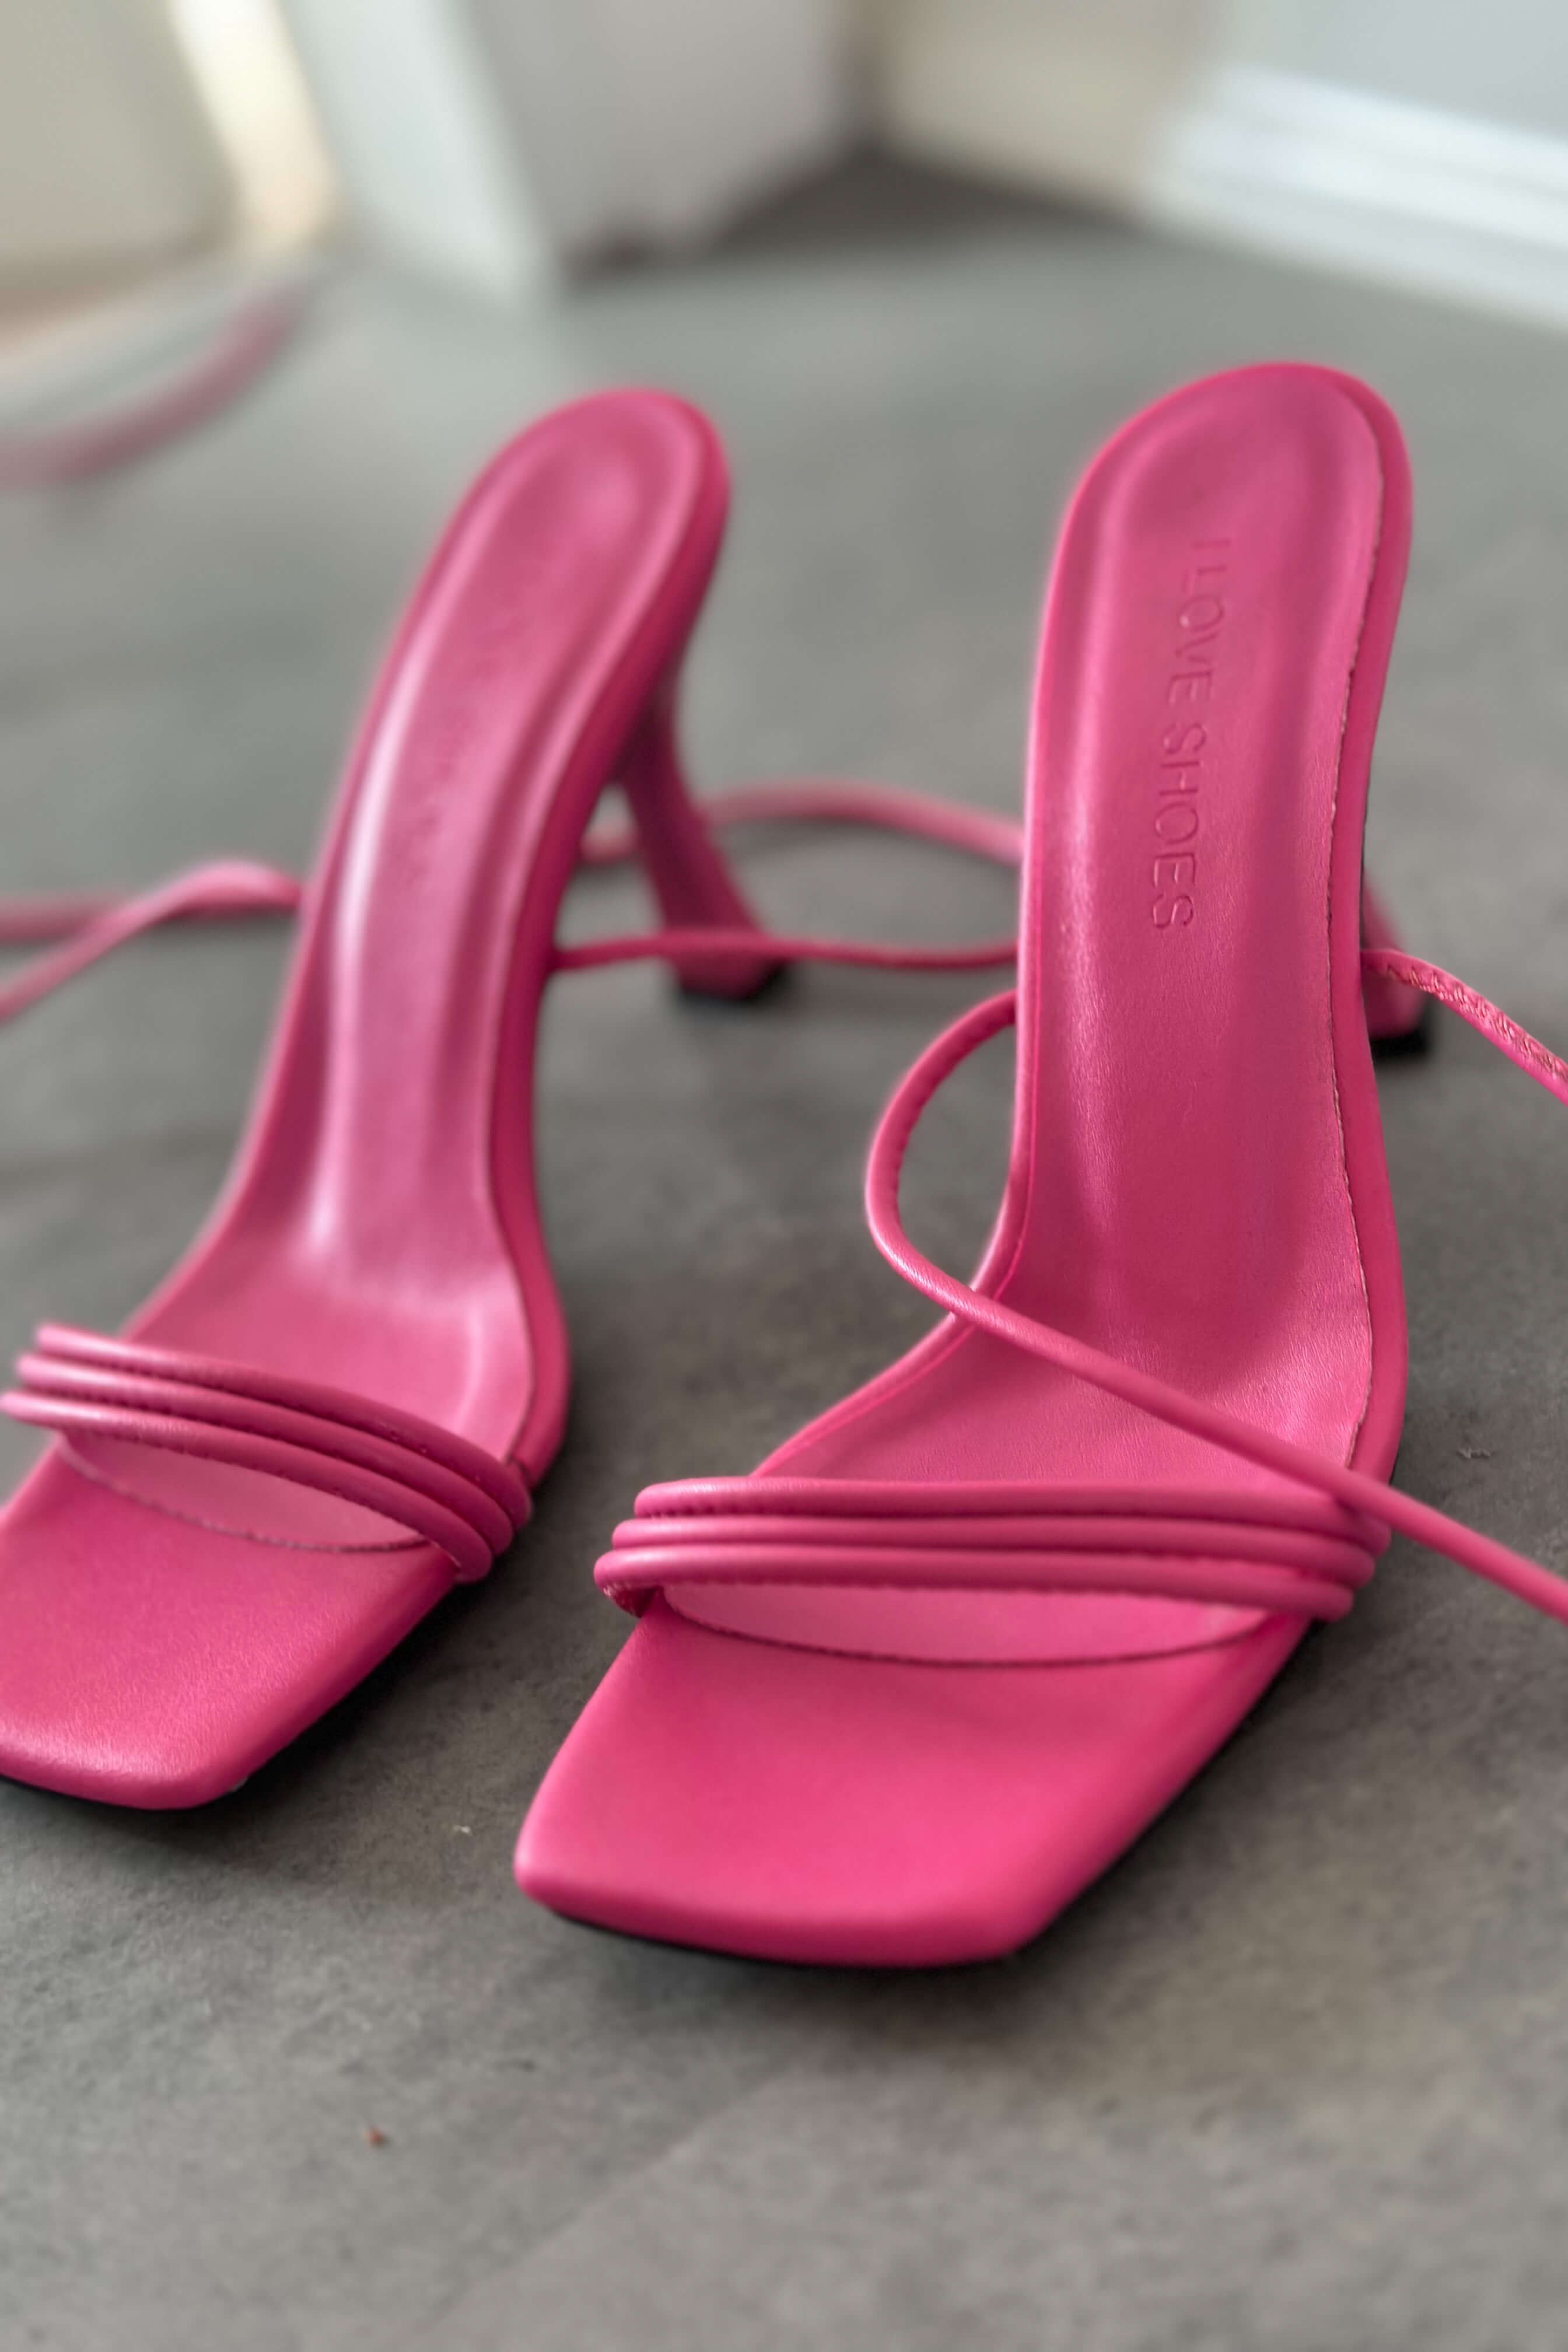 CESY MATT LEATHER BLACK DETAILED WOMEN'S high -heeled shoe fuchsia pink